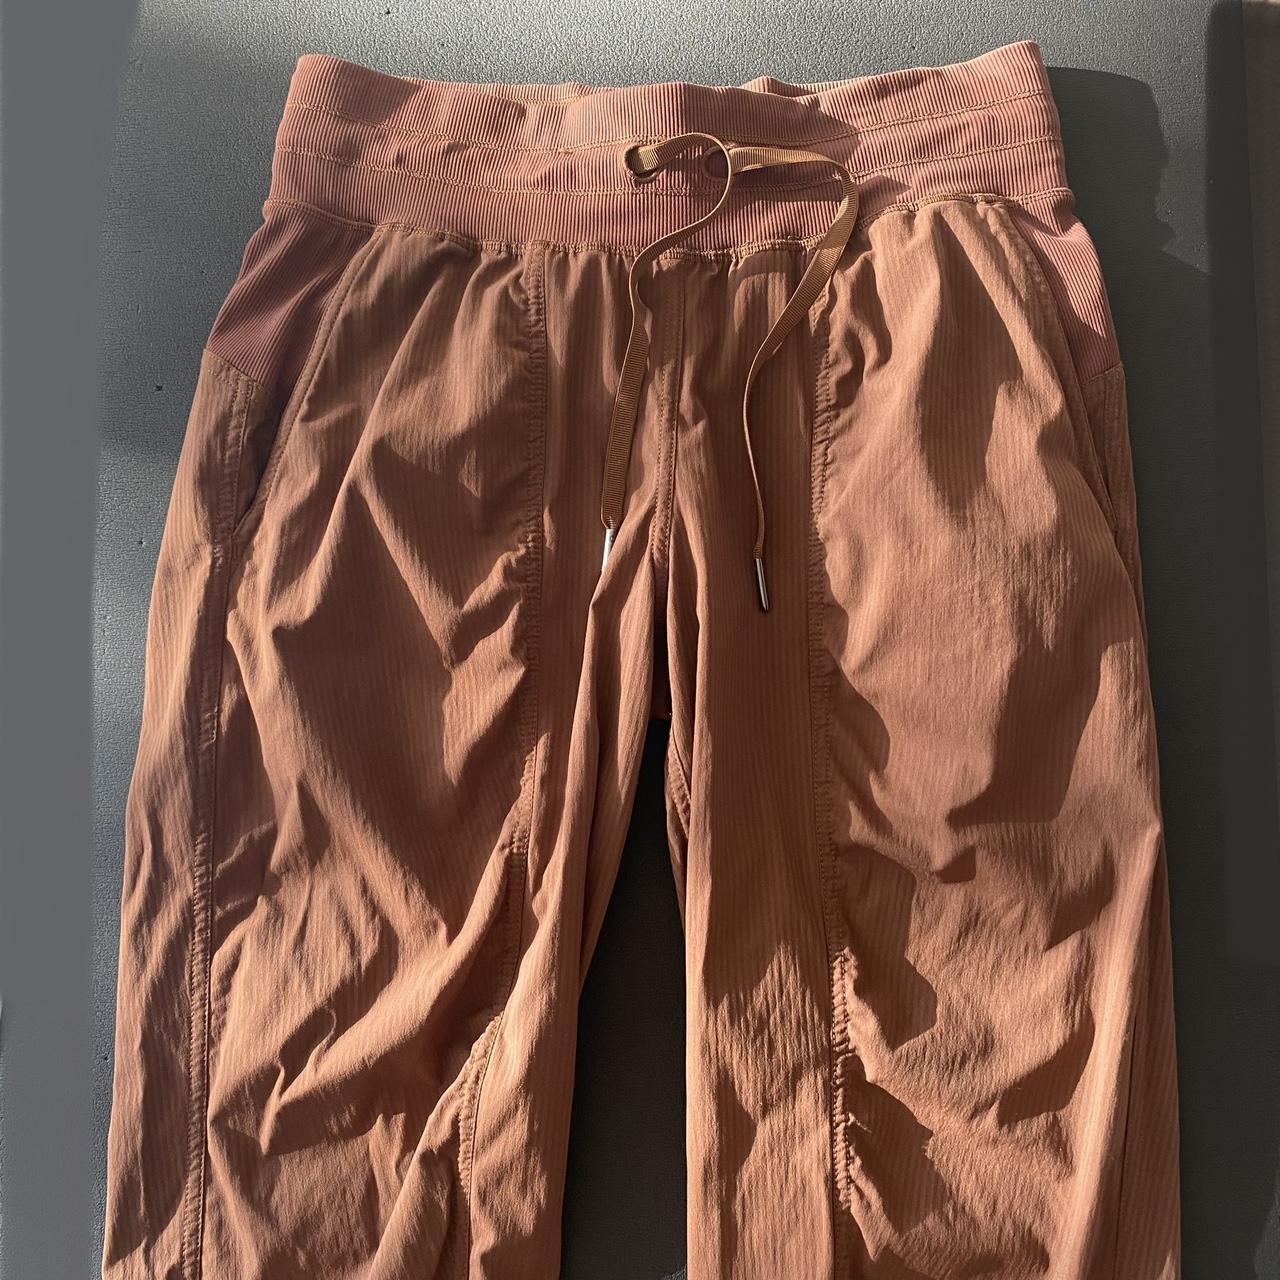 lululemon dance studio jogger pants size 4 roasted - Depop